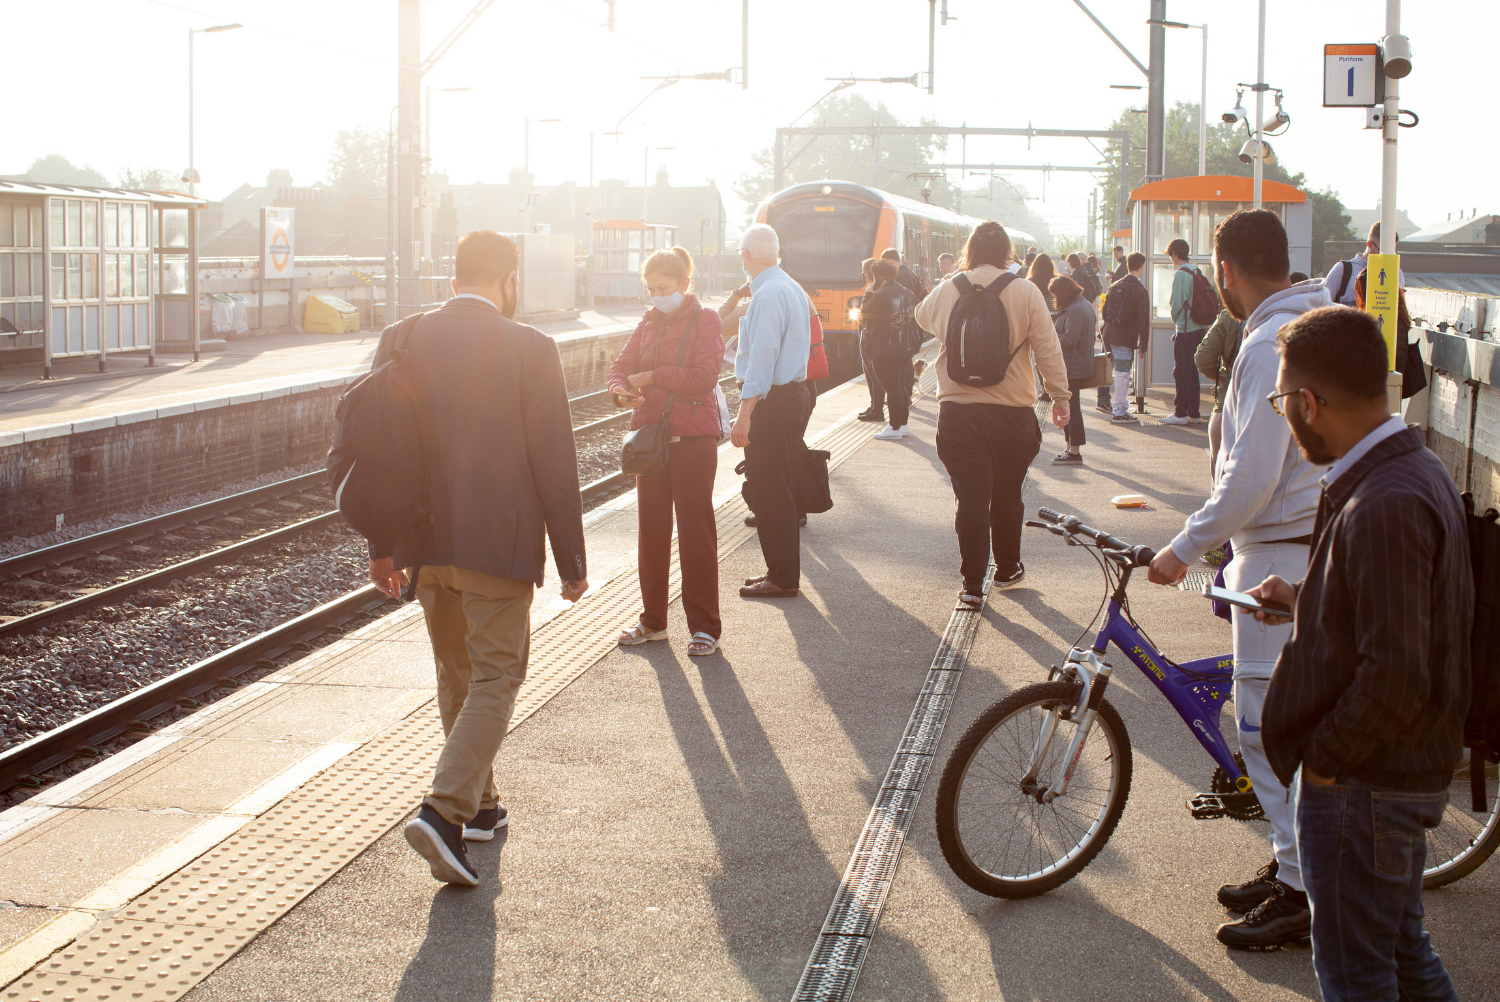 People commuting by public transportation, trains, bikes, walking